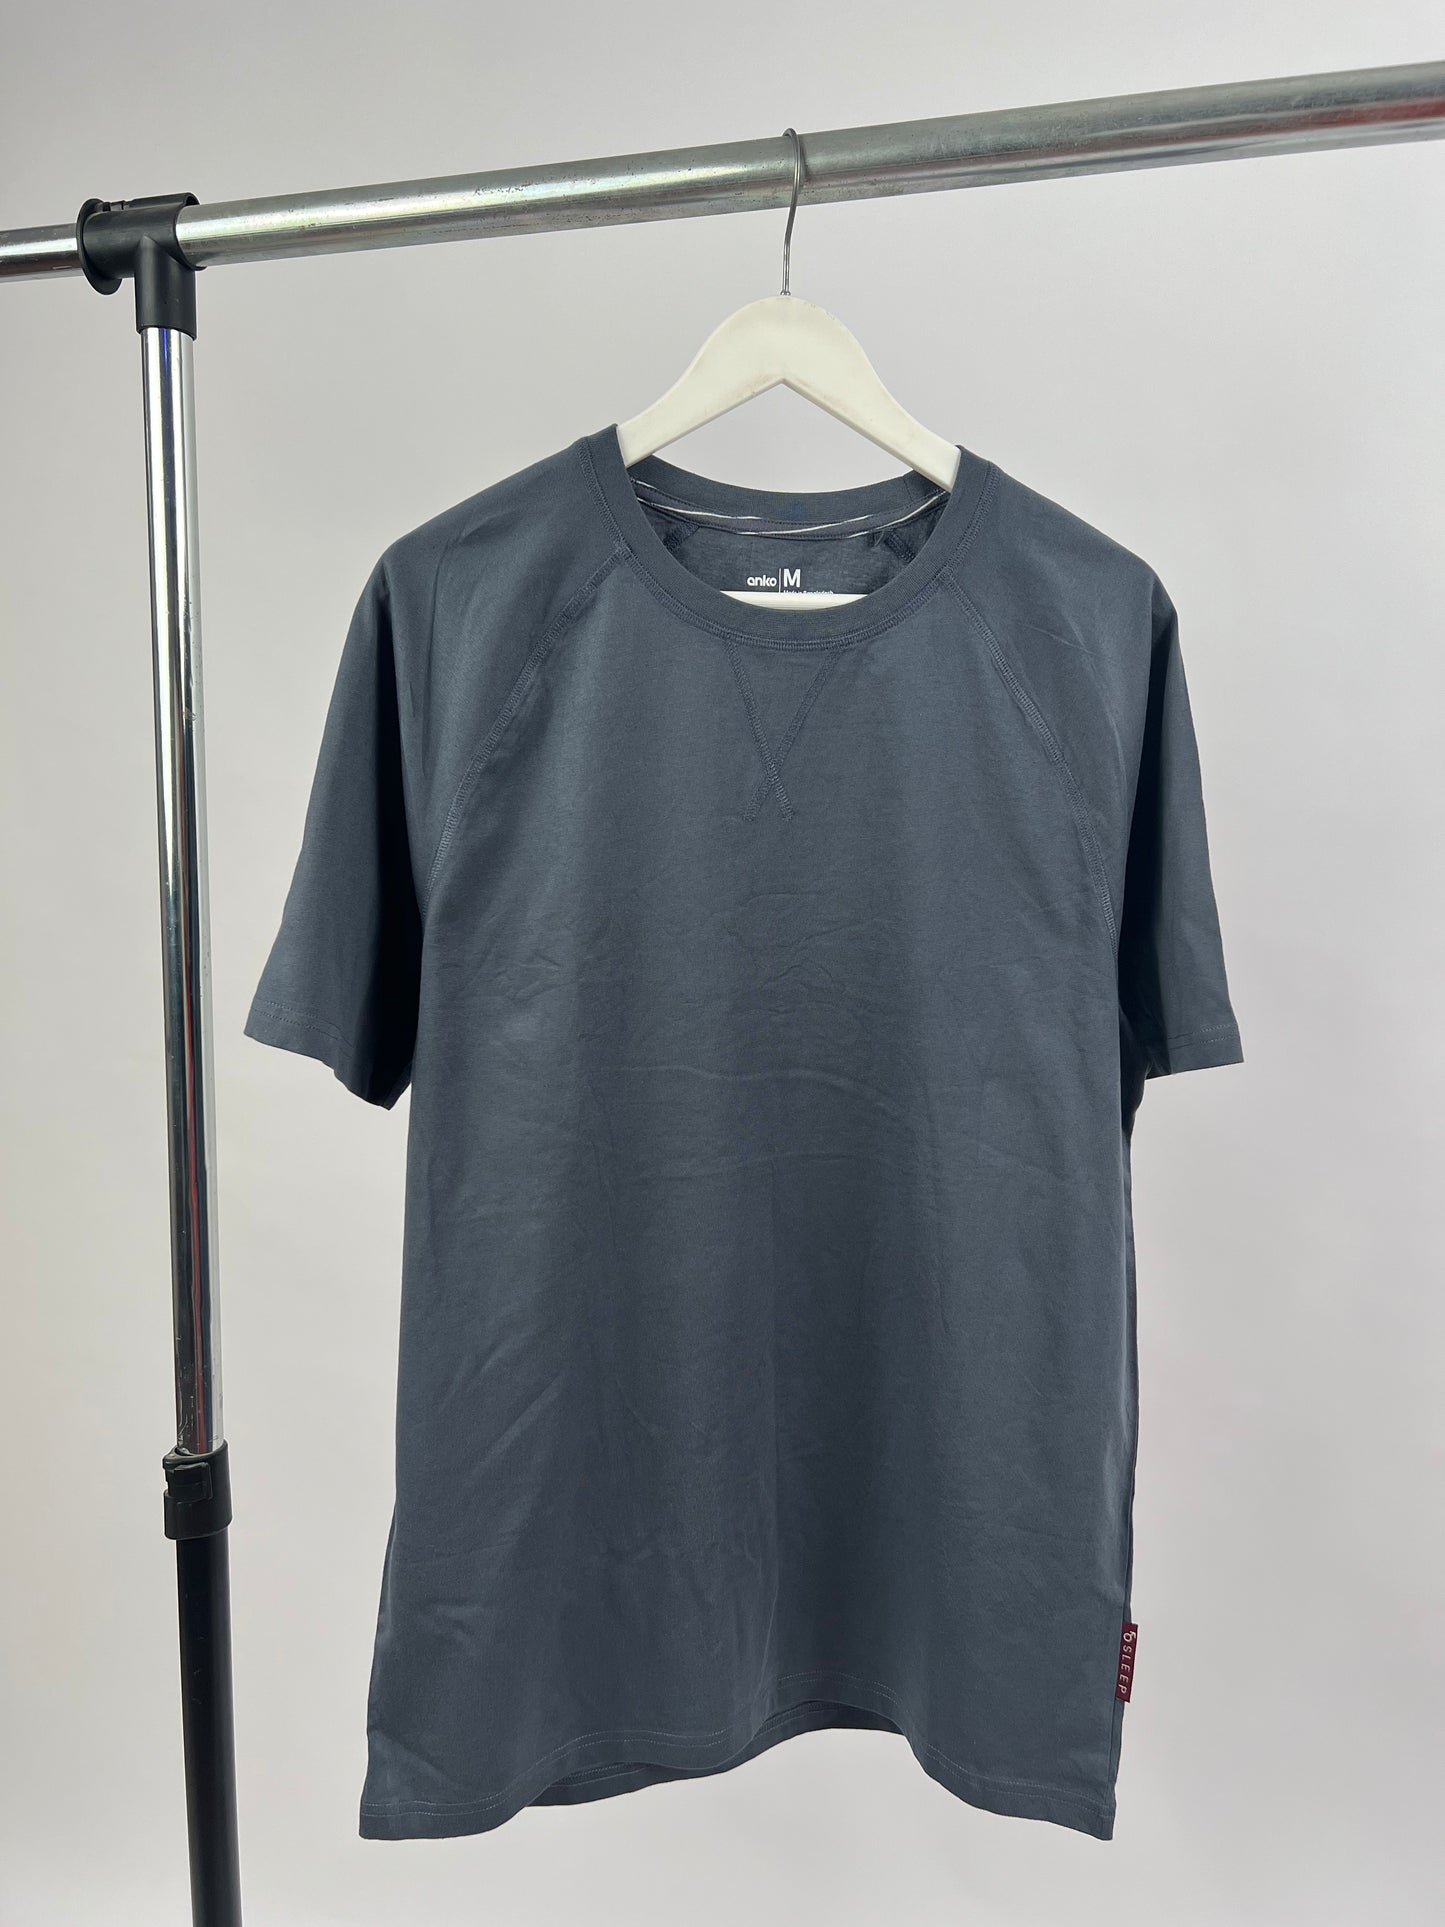 Anko t-shirt in Grey